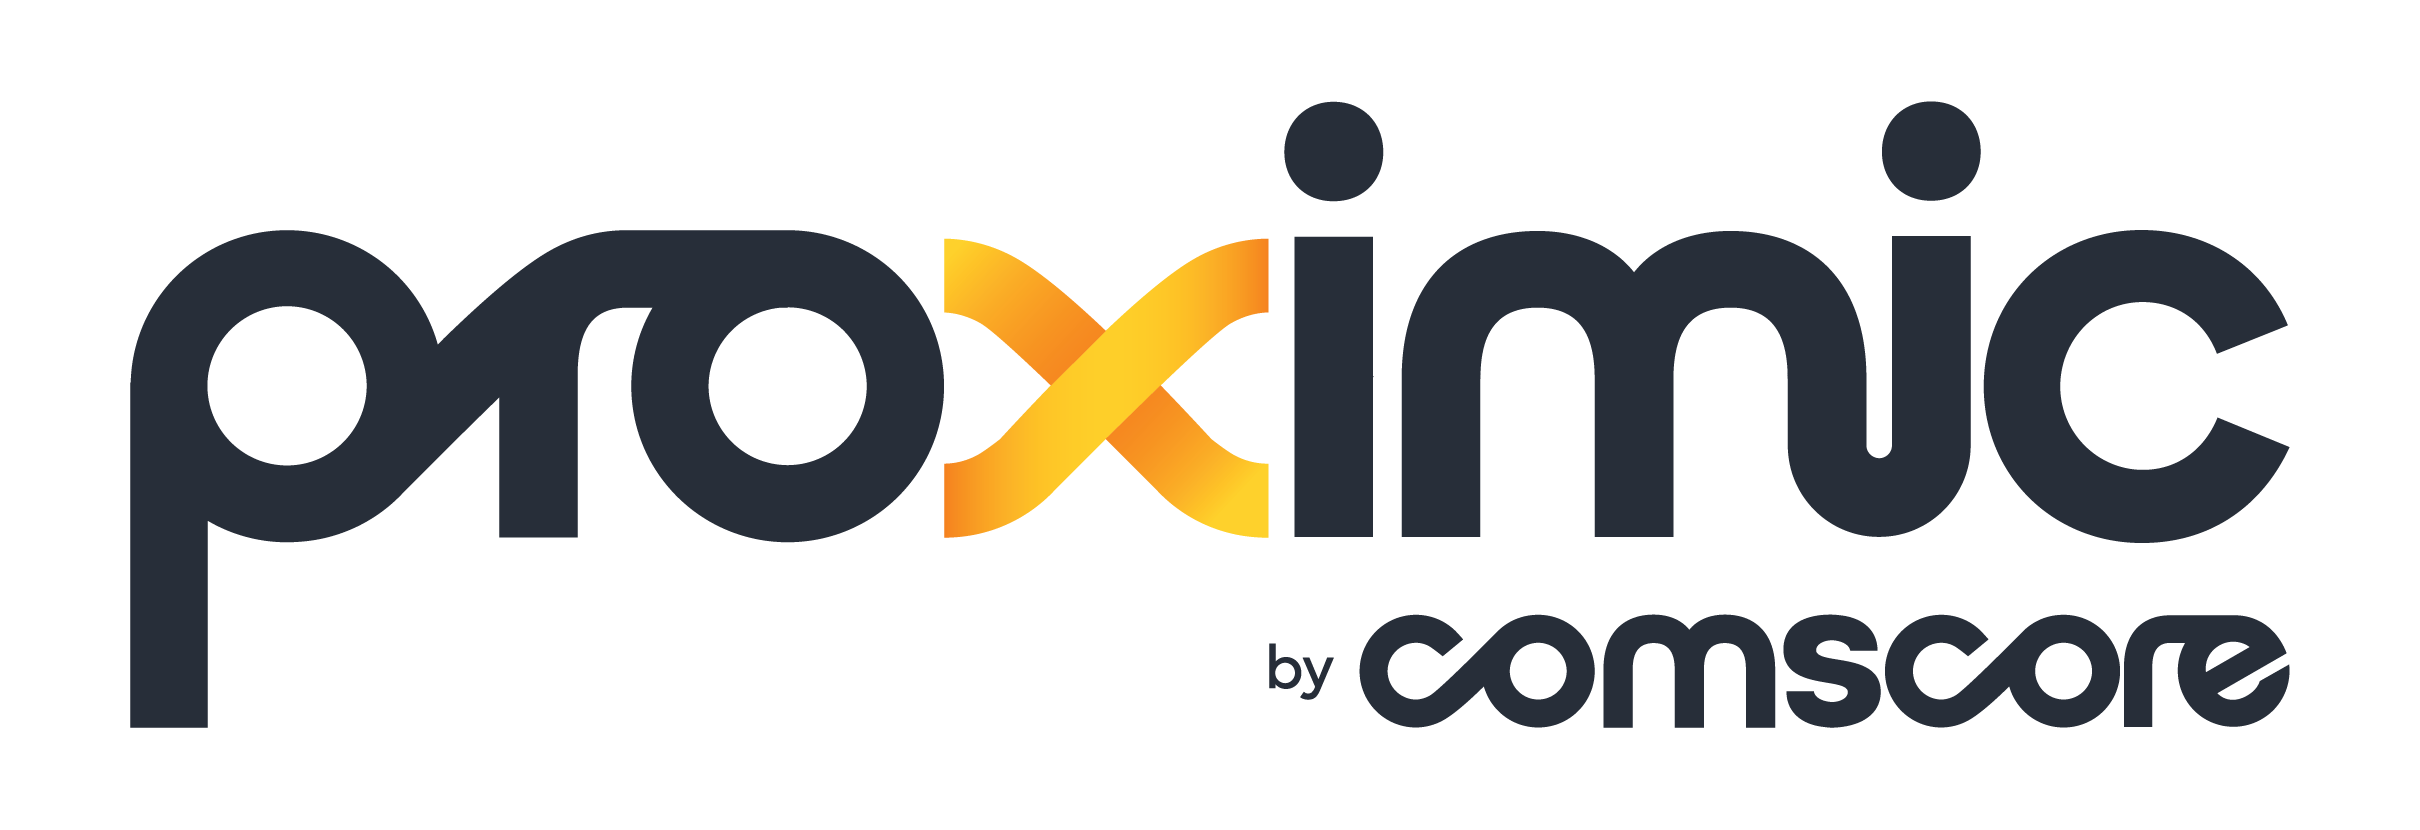 Proximic_by_Comscore_Logo_Standard.png